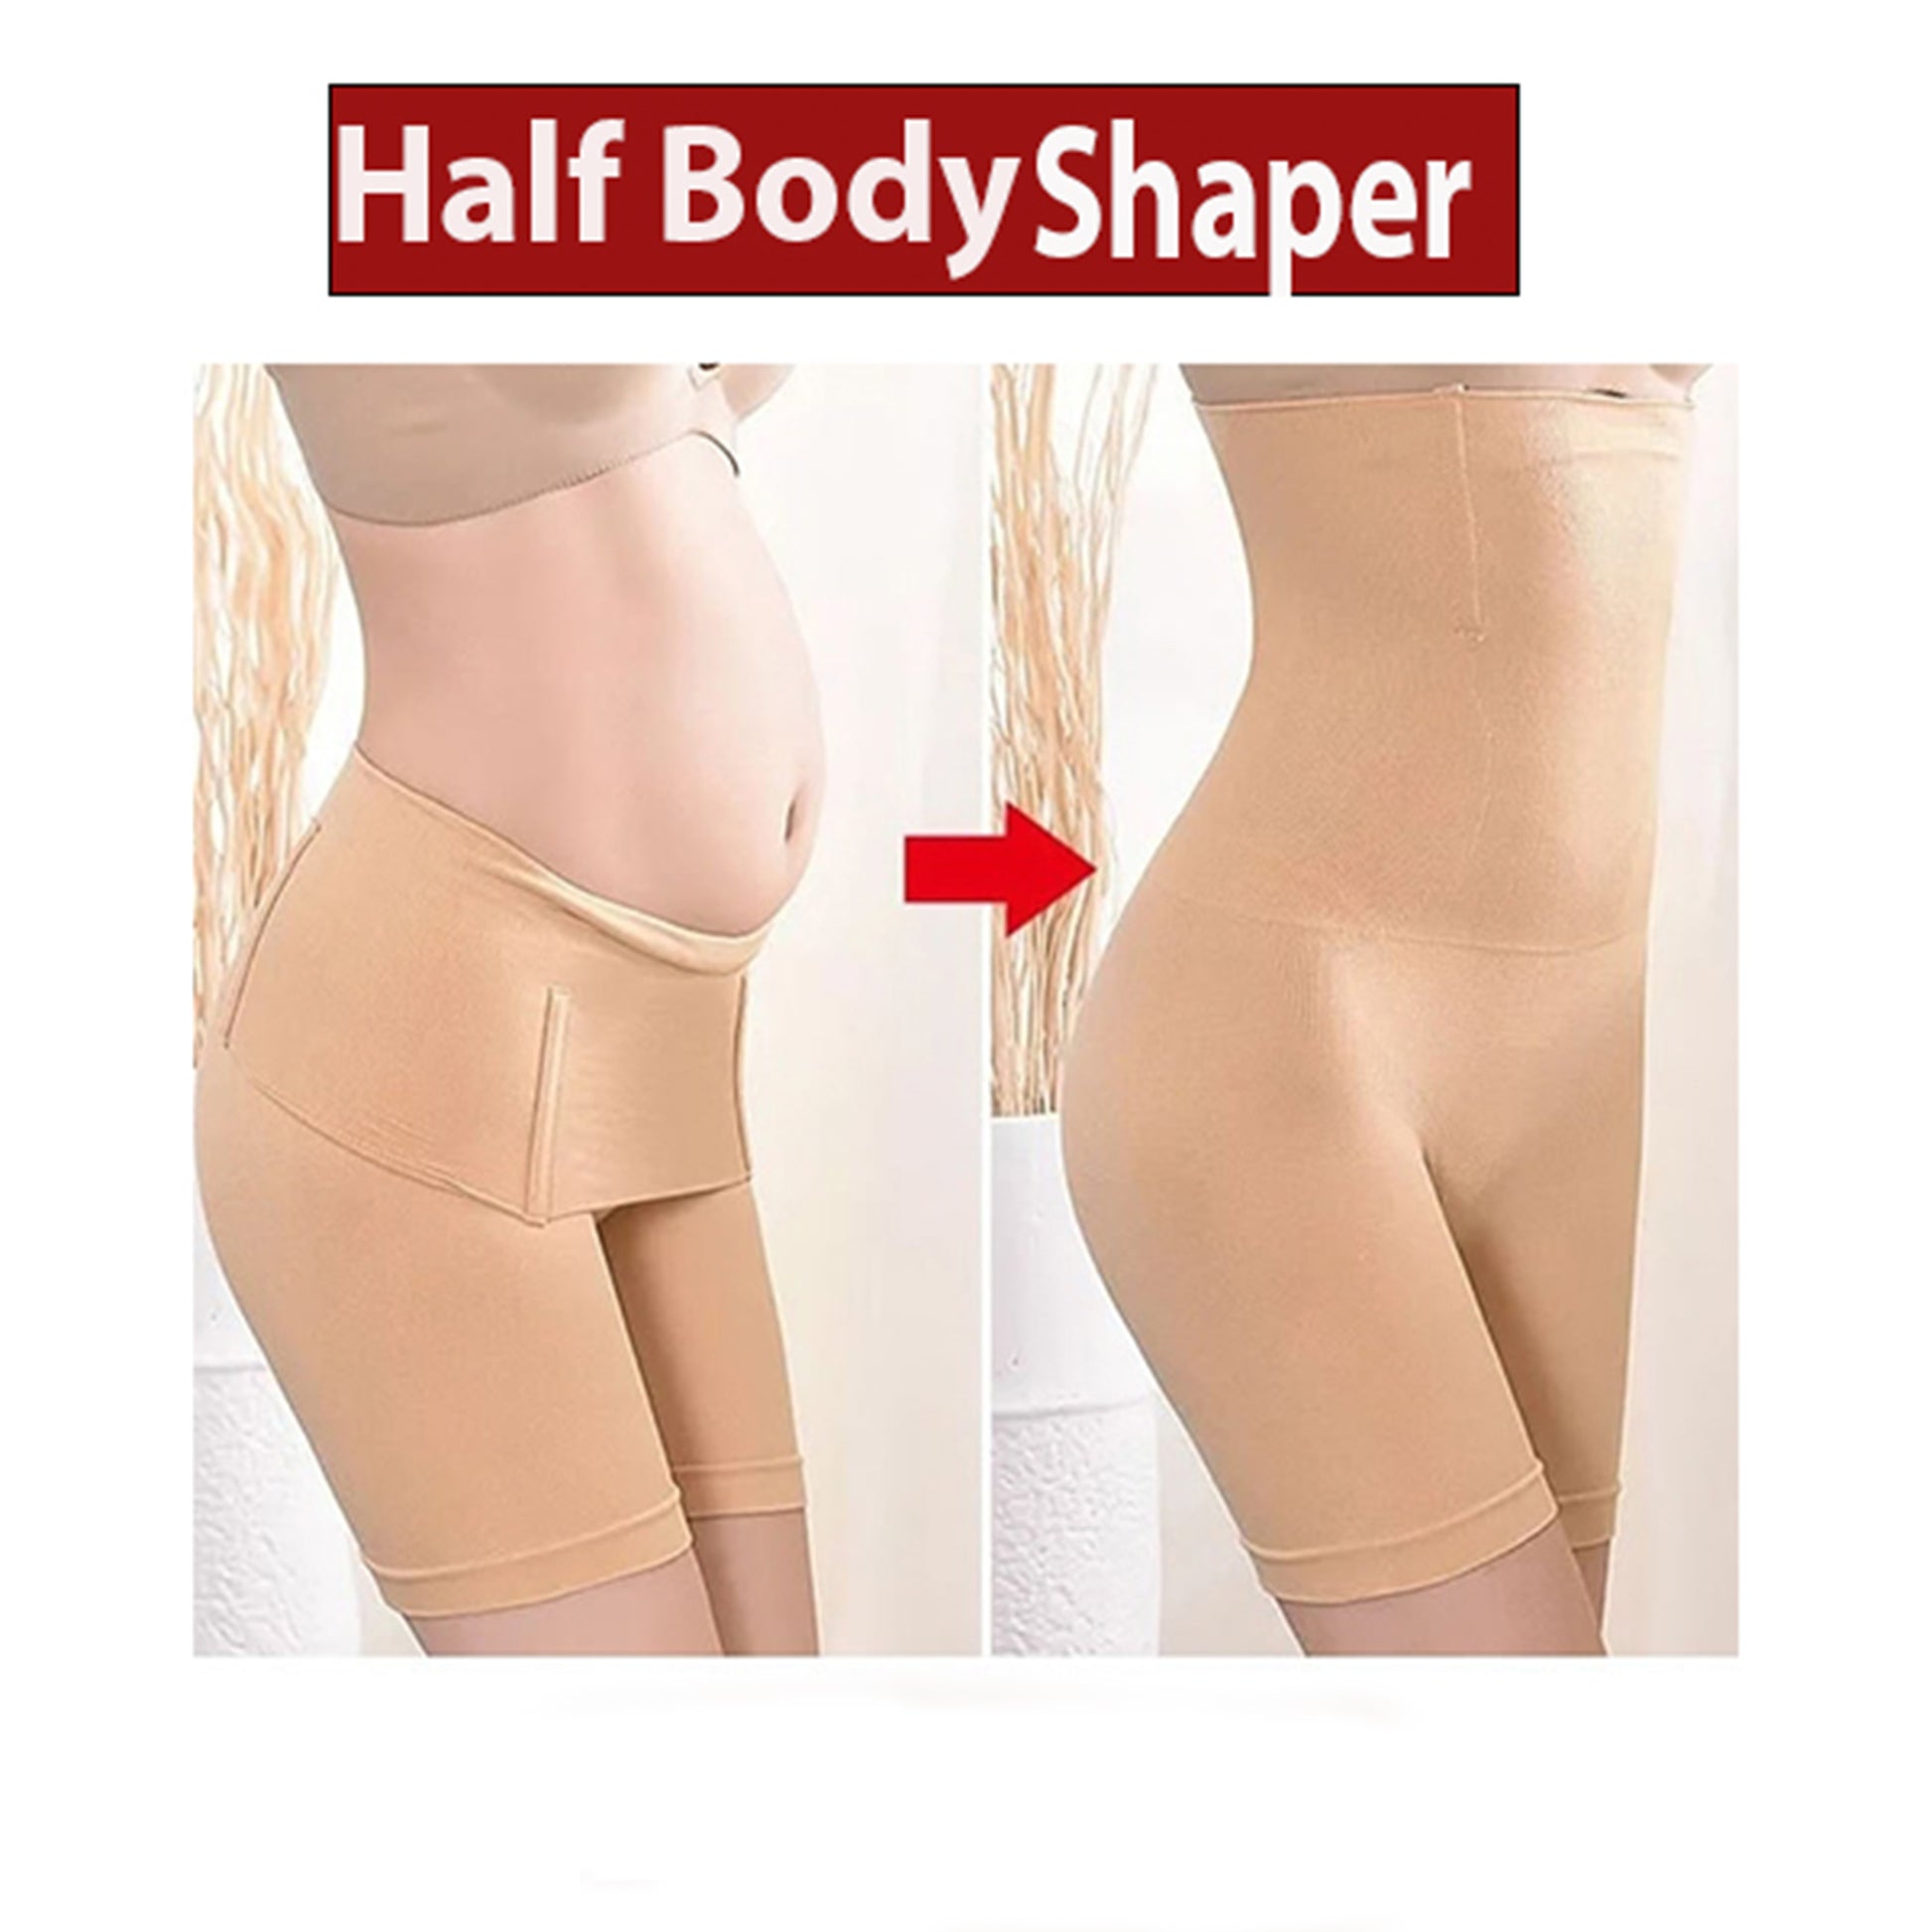 Half Body Shaper - Online Shopping Pakistan